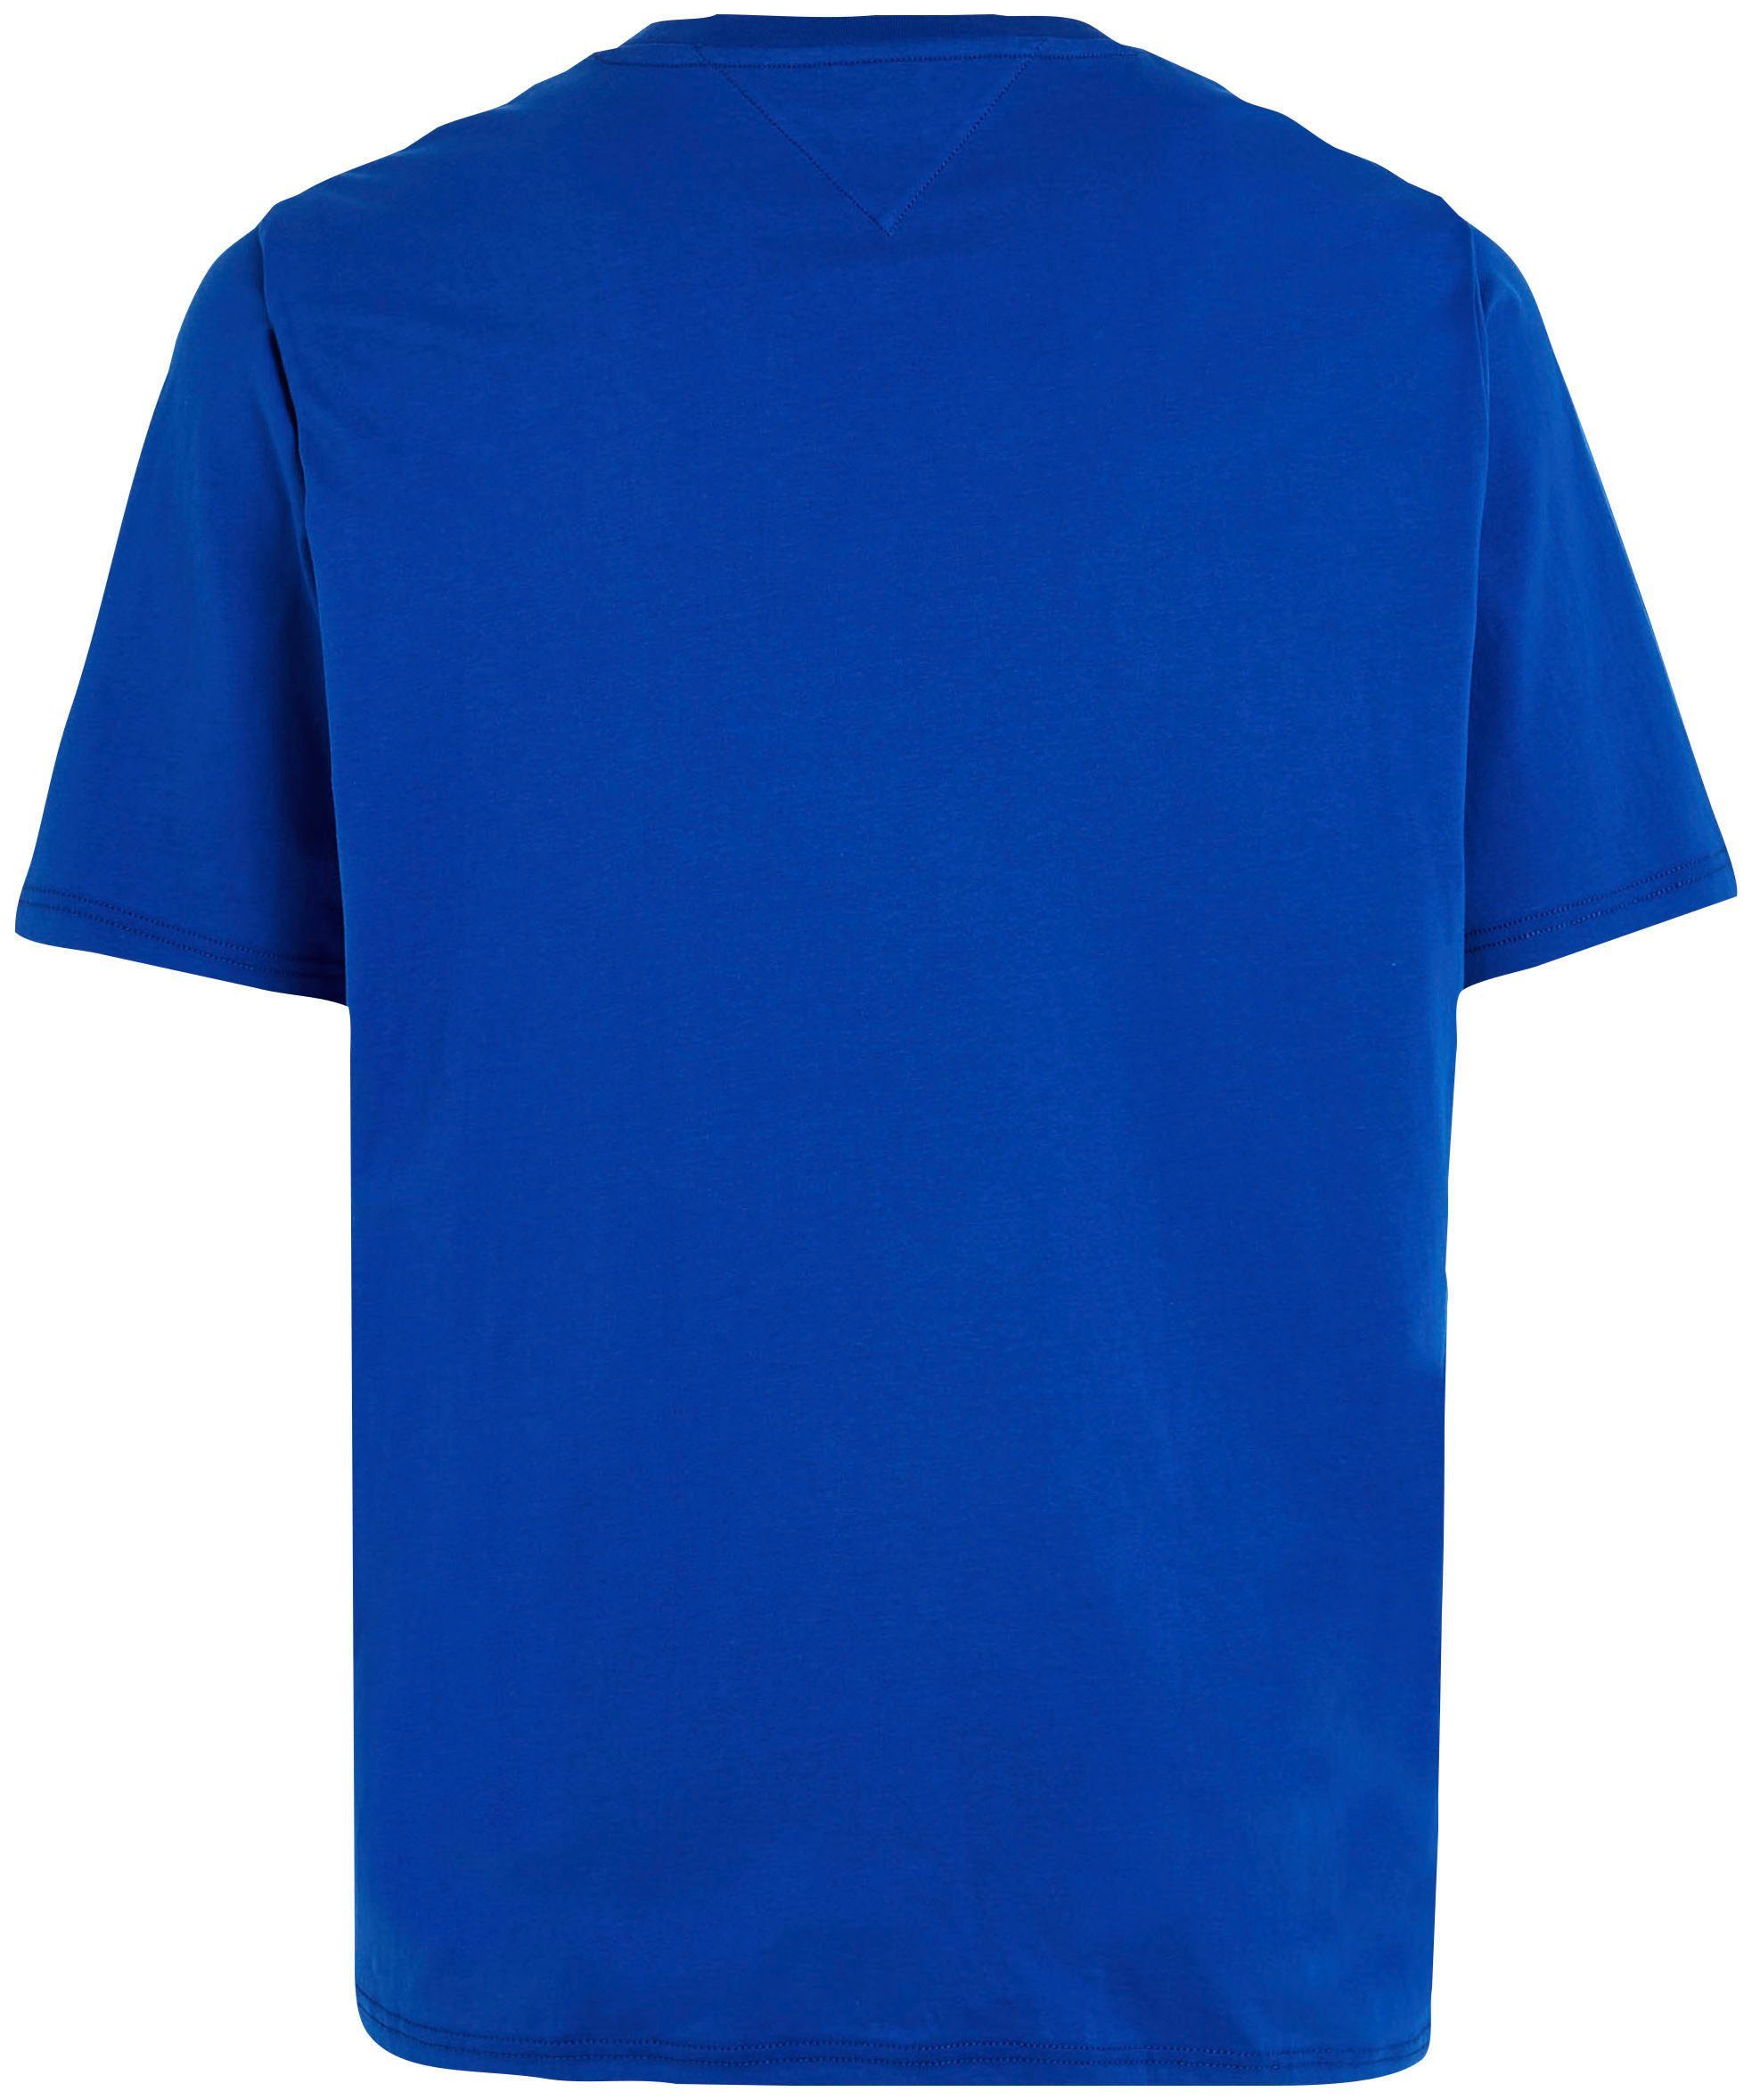 T-Shirt ESSENTIAL Blue TJM Jeans PLUS Ultra TEE auf Plus Print Brust GRAPHIC der Tommy mit